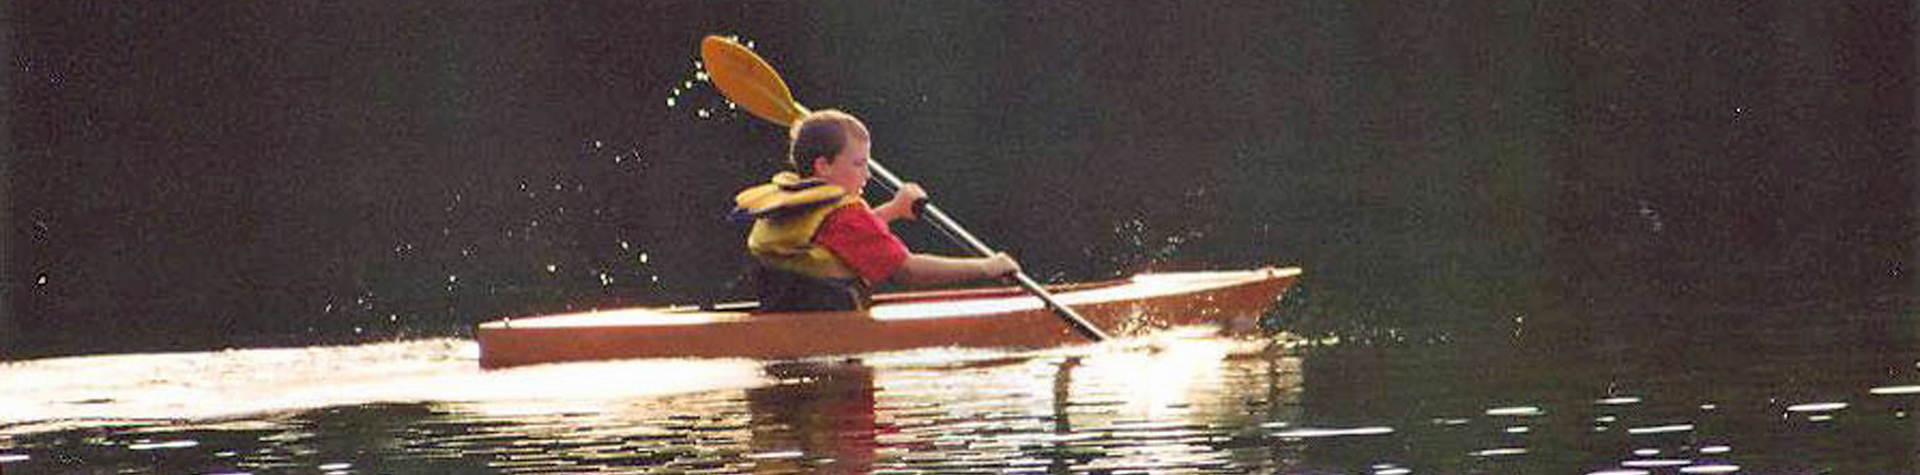 Kayaks: Smallwaters by Otto Vallinga Yacht Design - Image 4397